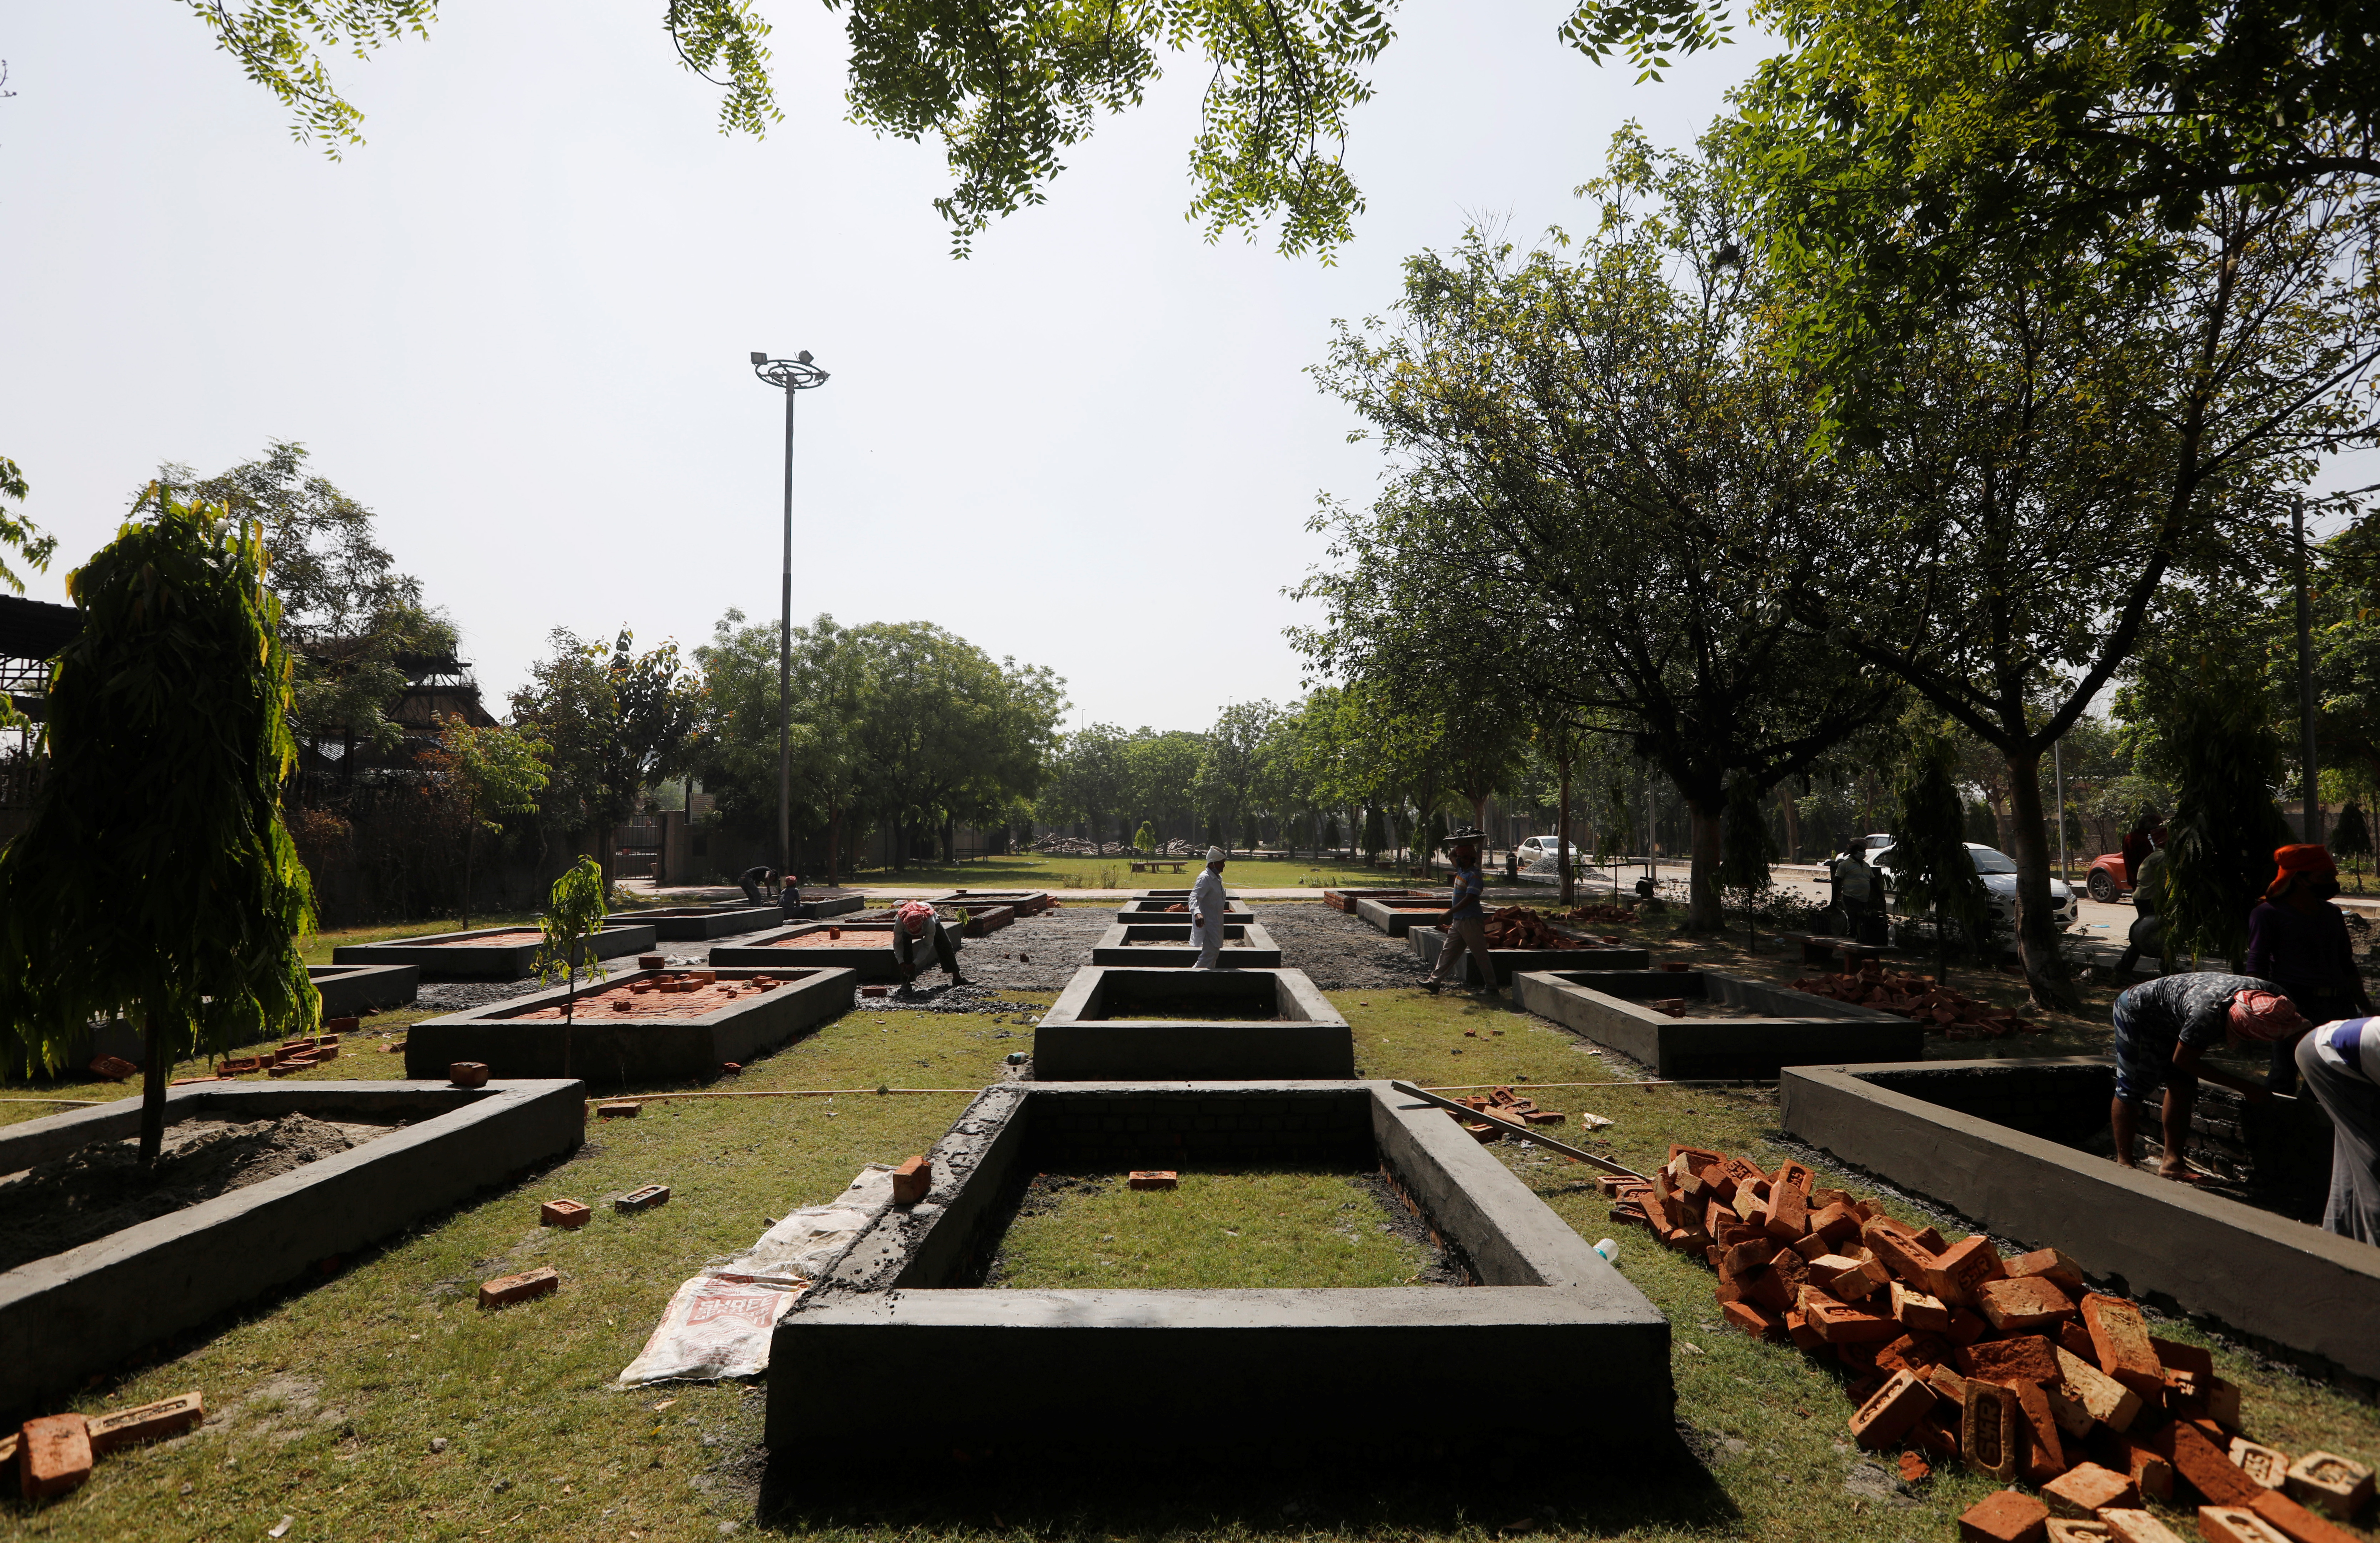 Workers build new platforms to cremate bodies inside a crematorium, amid the spread of the coronavirus disease (COVID-19) in New Delhi, India, April 26, 2021. REUTERS/Adnan Abidi